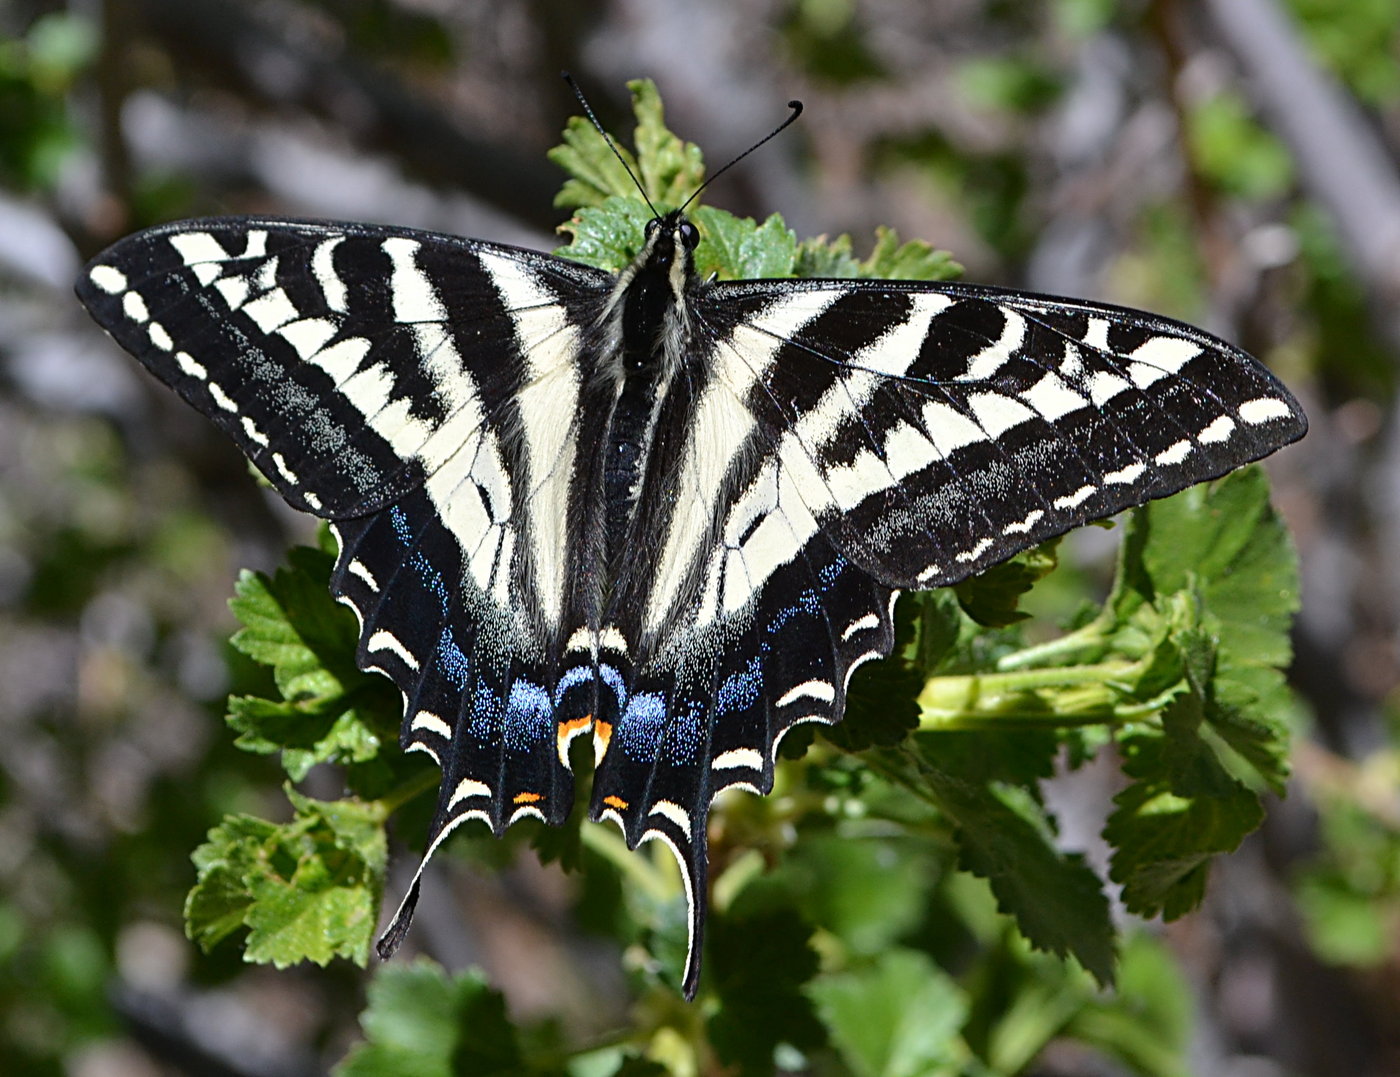 Pale swallowtail butteryfly